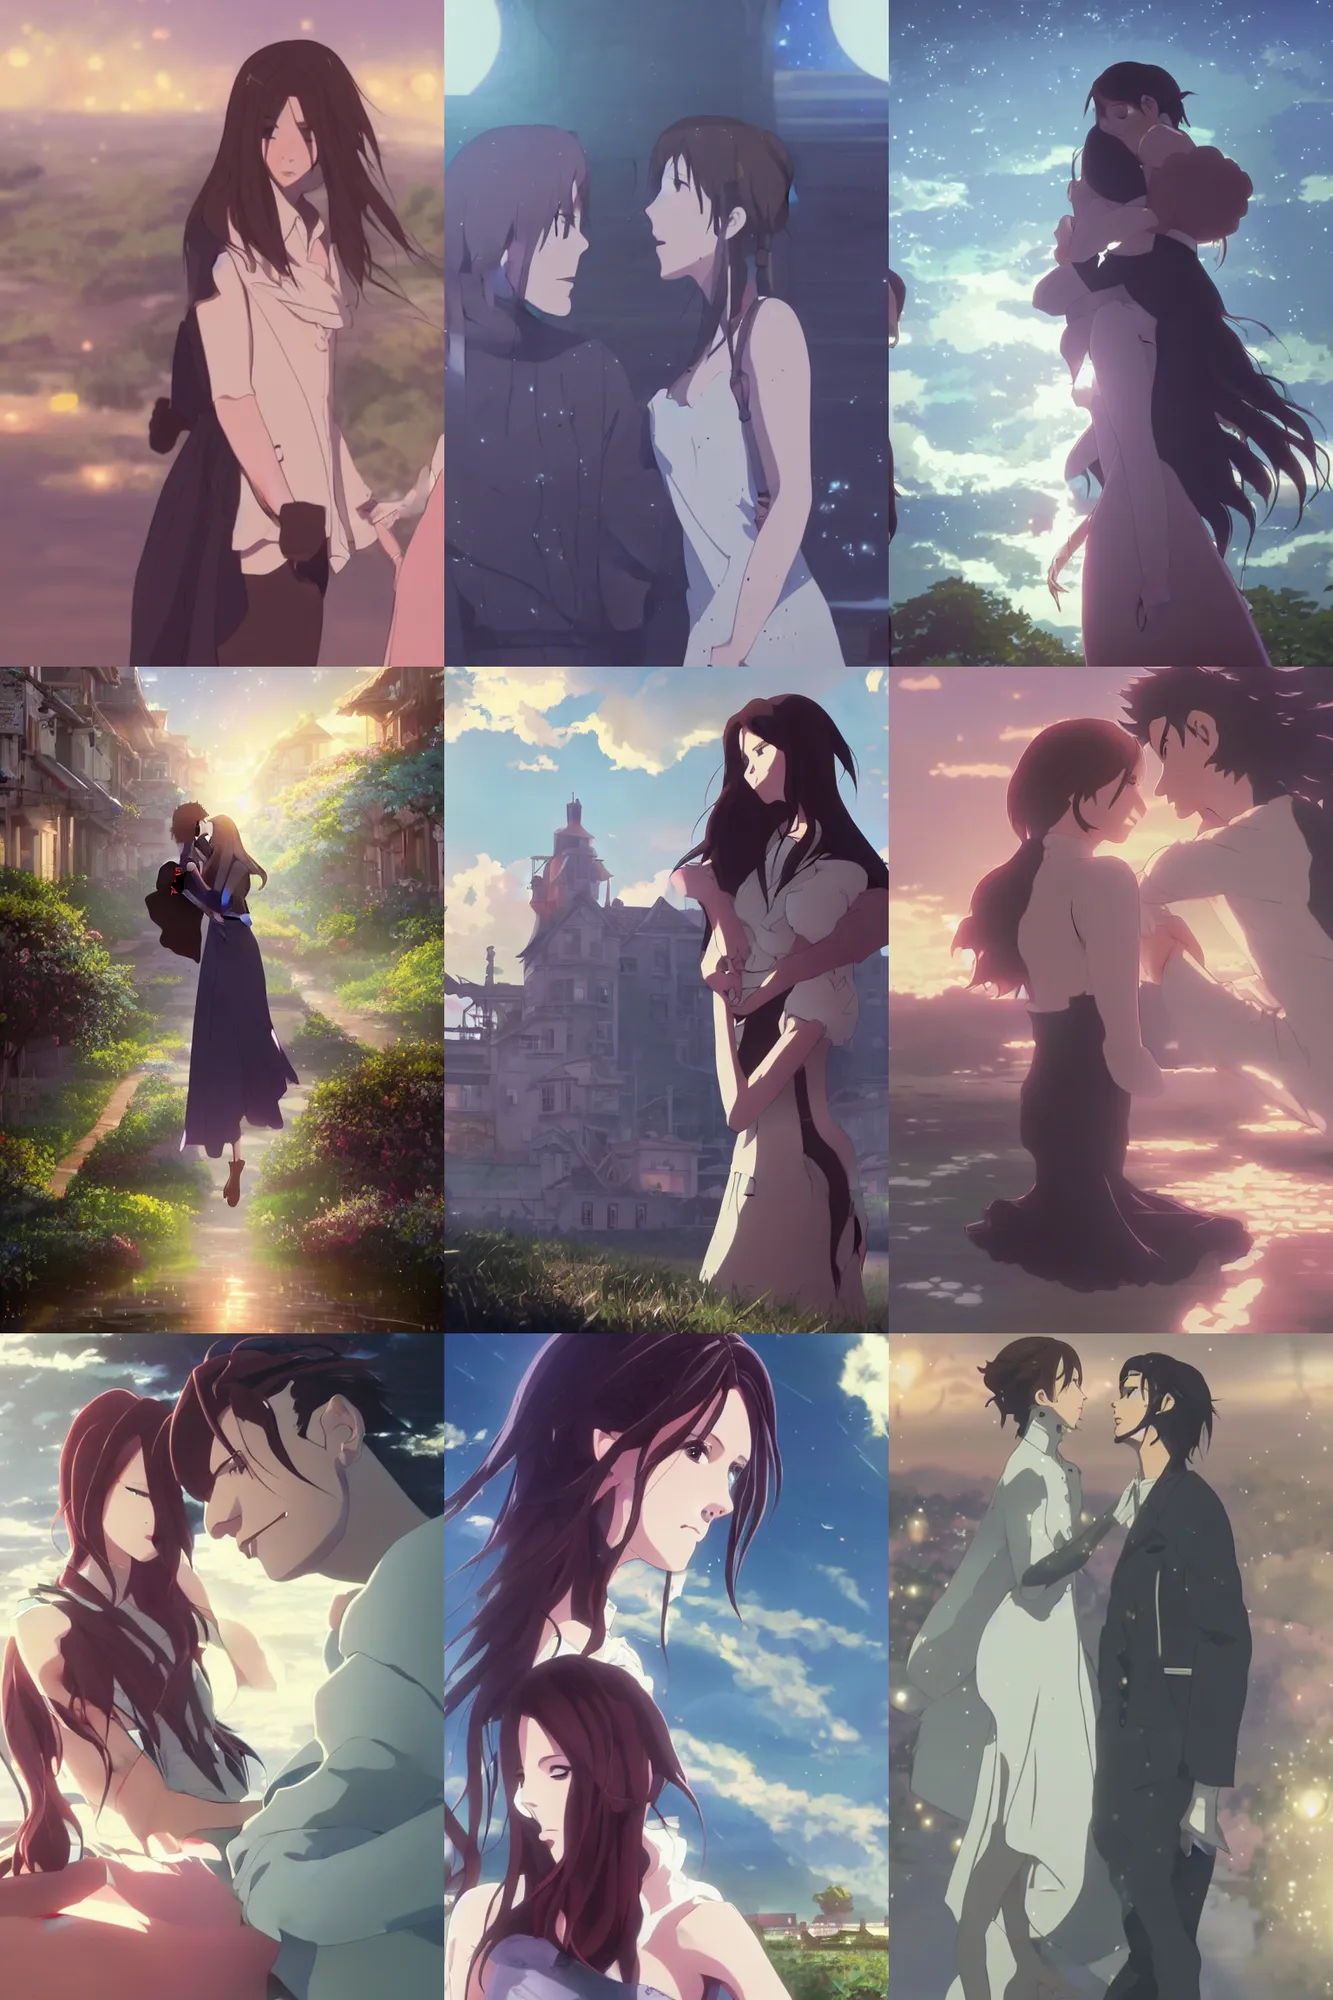 Prompt: romance movie starrig kate beckinsale by makoto shinkai, visually stunning